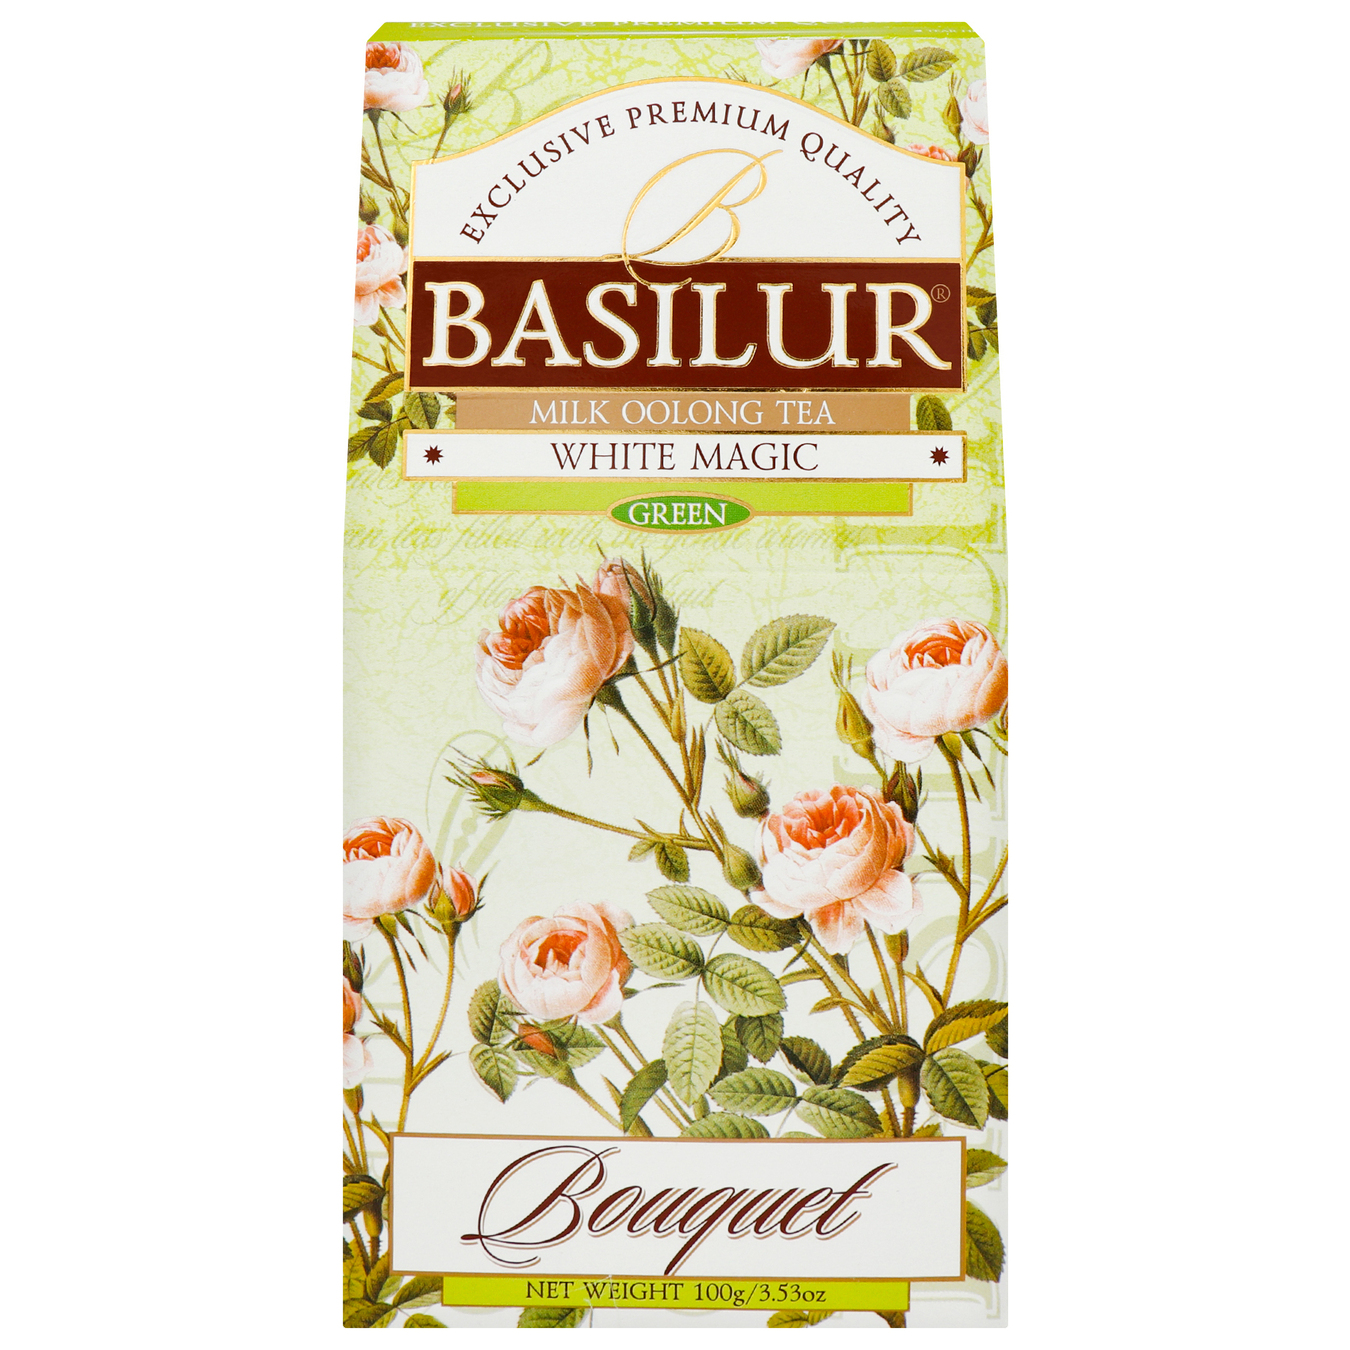 Green tea Basilur collection Bouquet White magic 100g